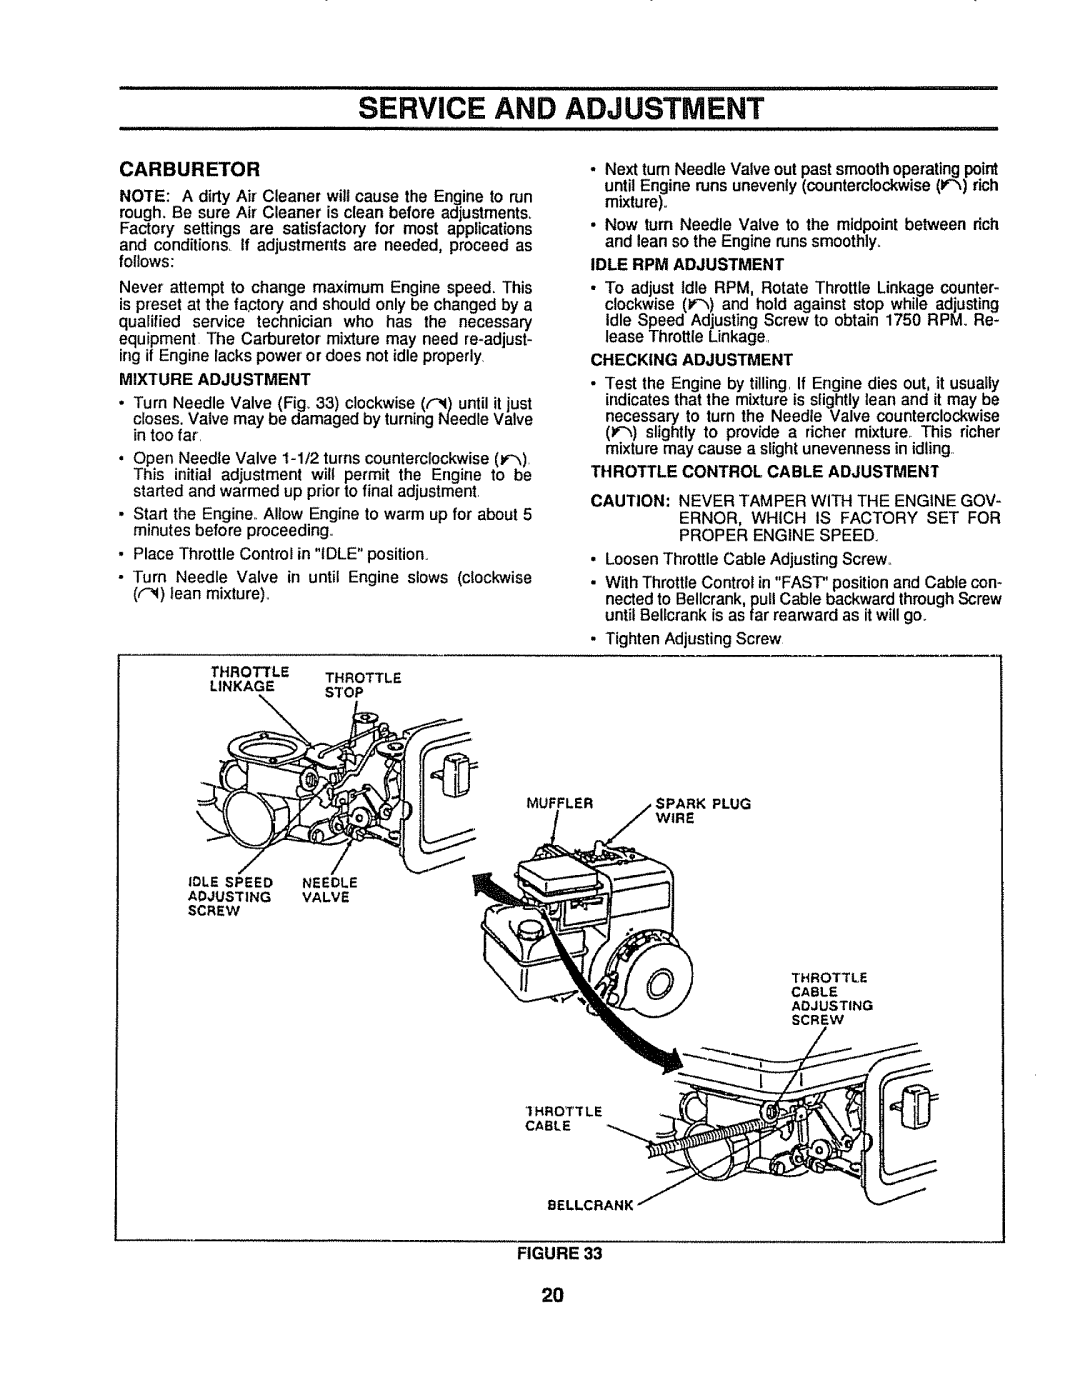 Sears 917.299642 owner manual Carburetor, Mixture Adjustment, Idle RPM Adjustment, Checking Adjustment 